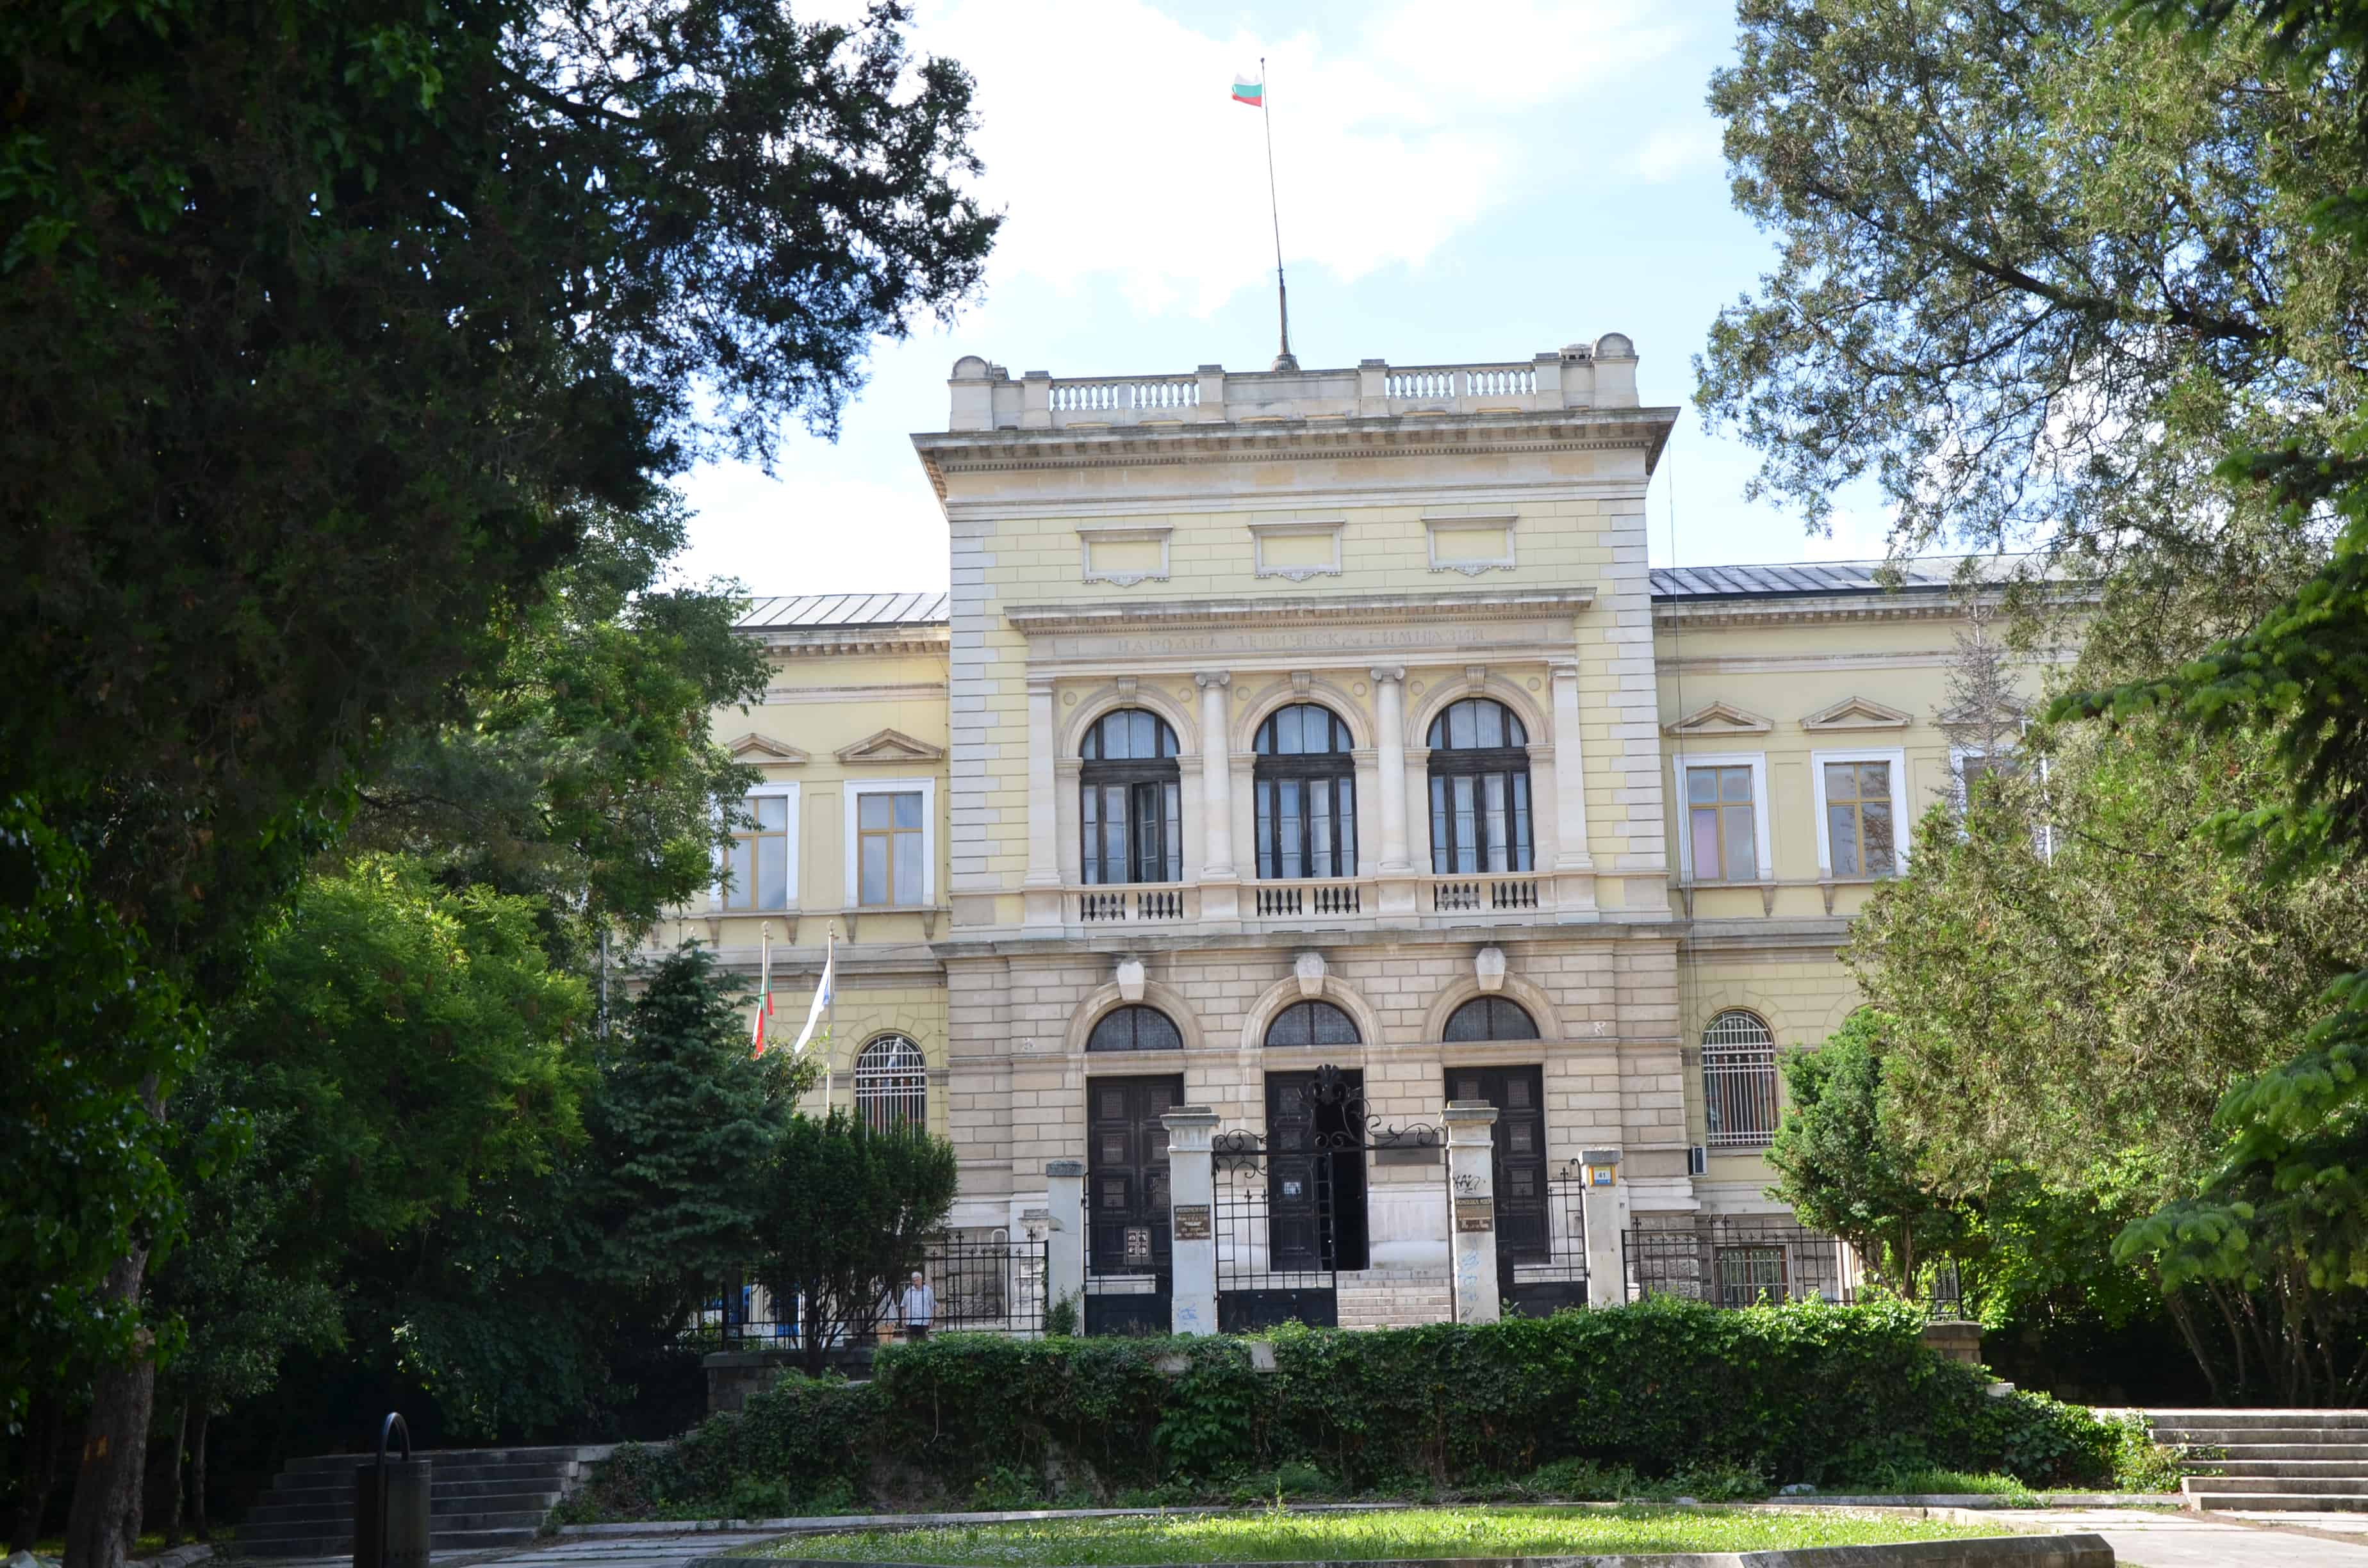 Varna Archaeological Museum in Varna, Bulgaria